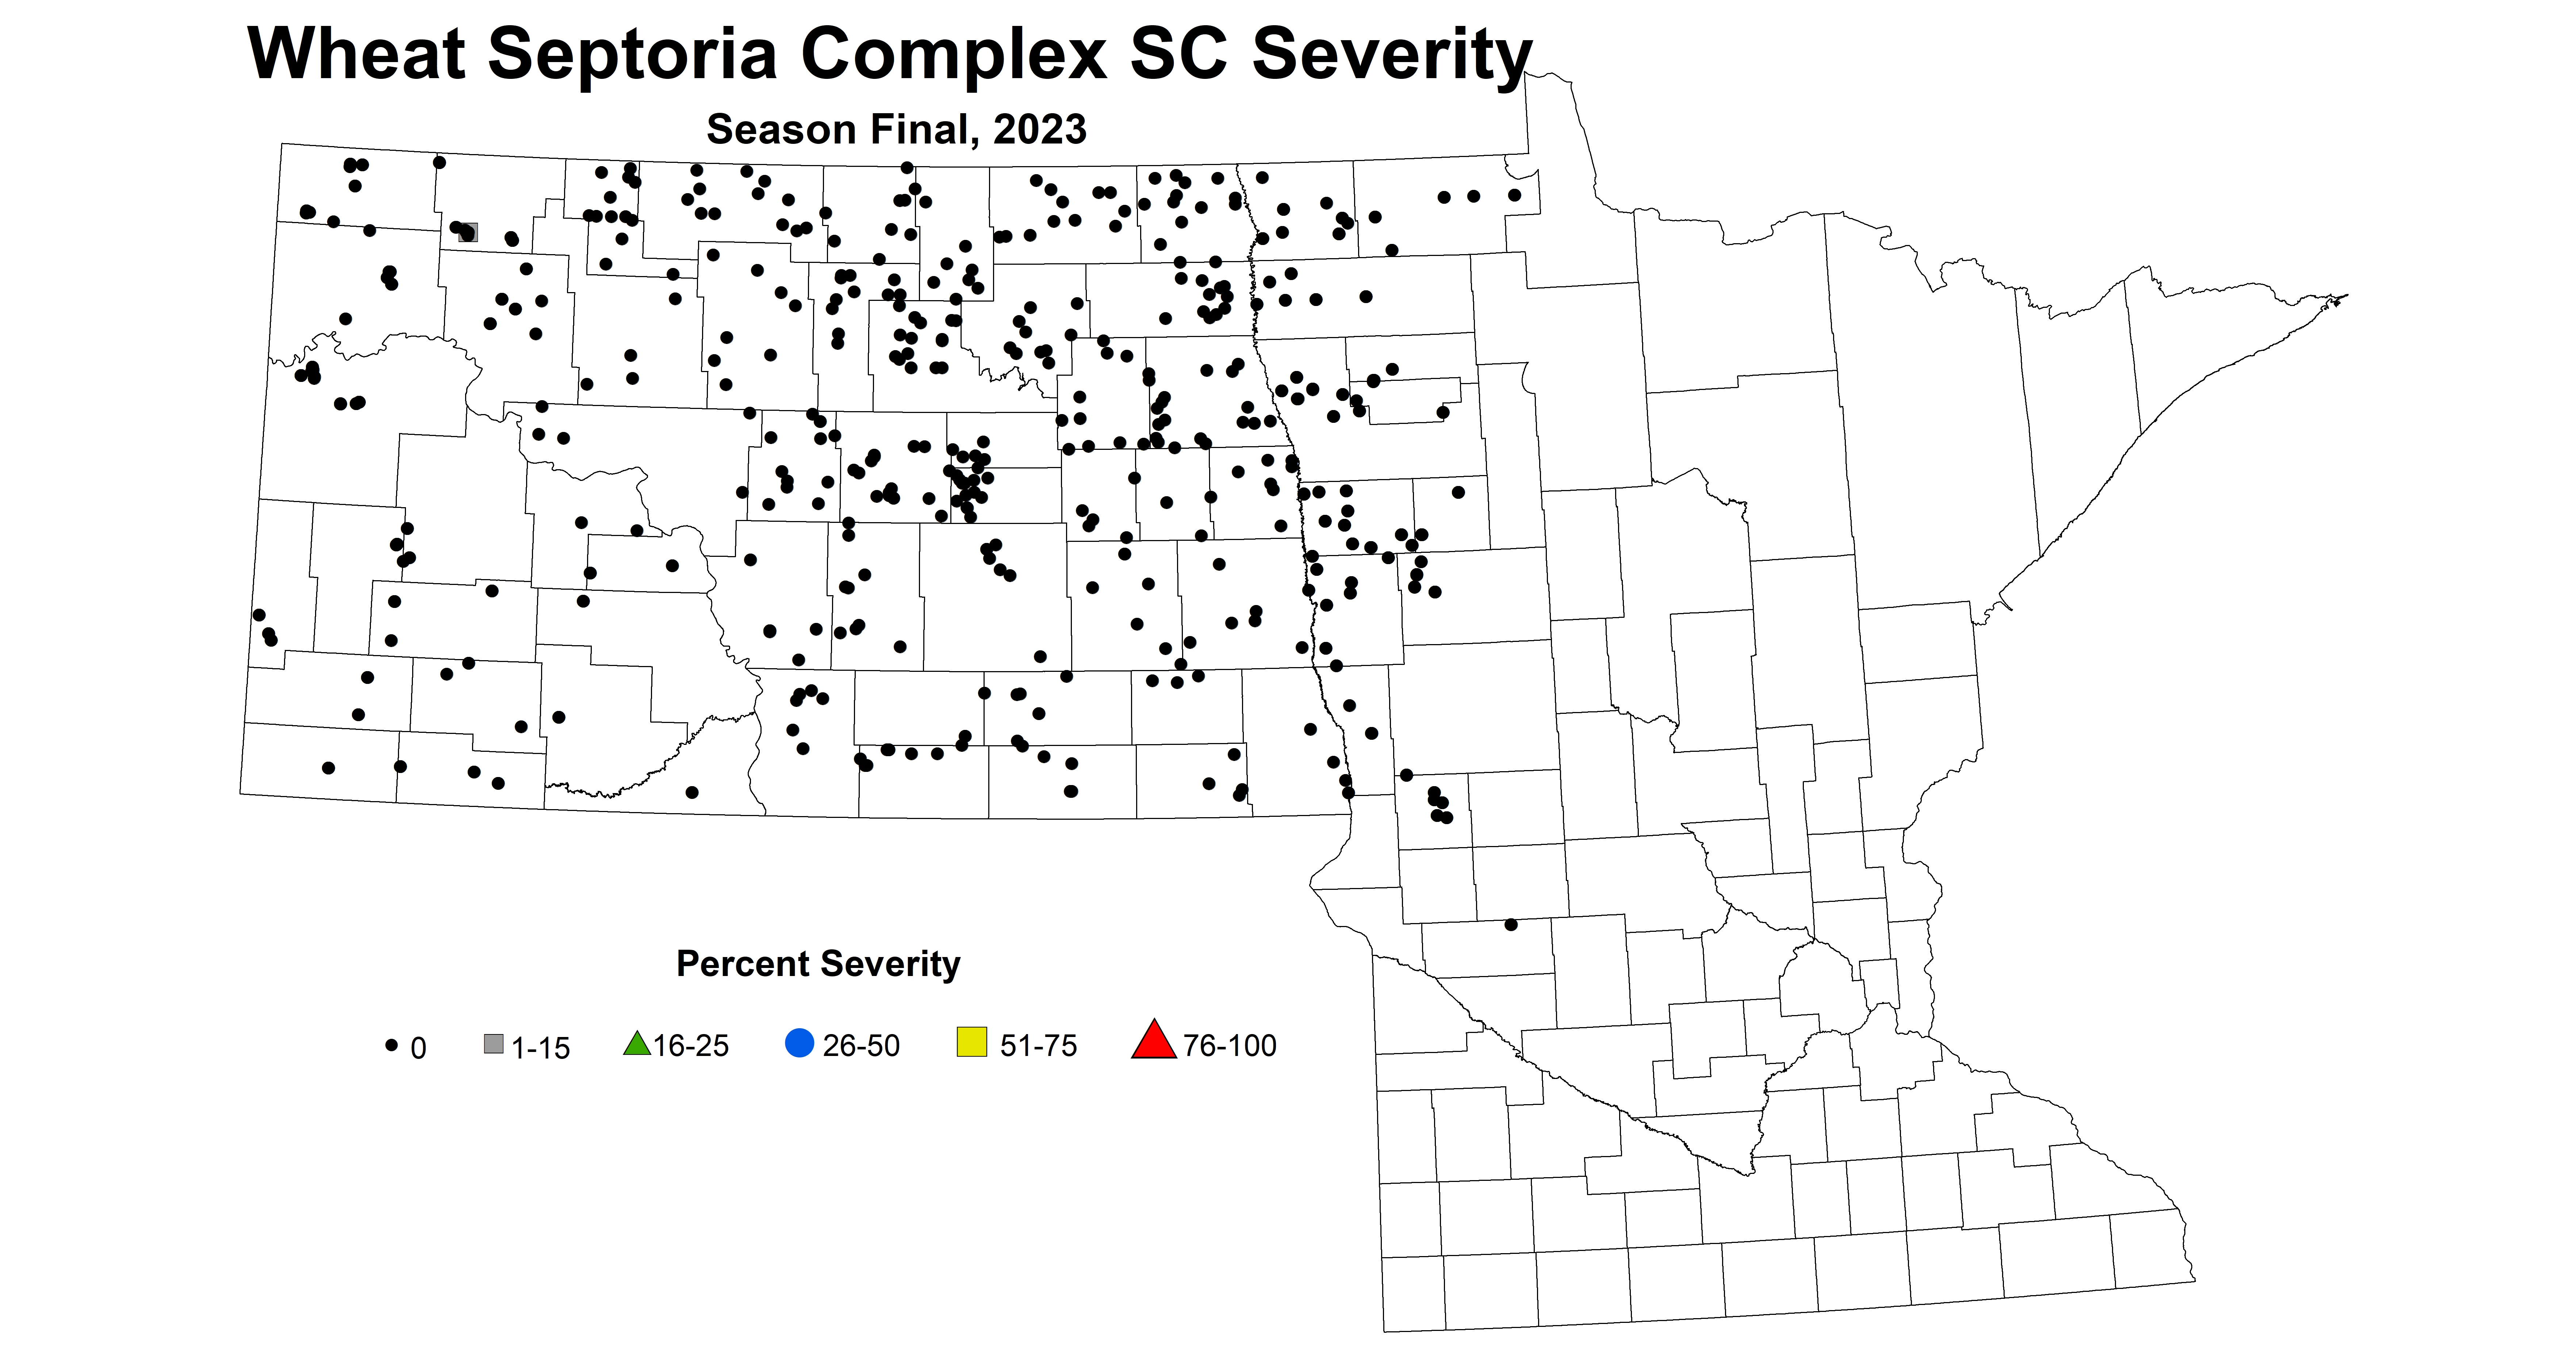 wheat septoria complex sc severity season final 2023